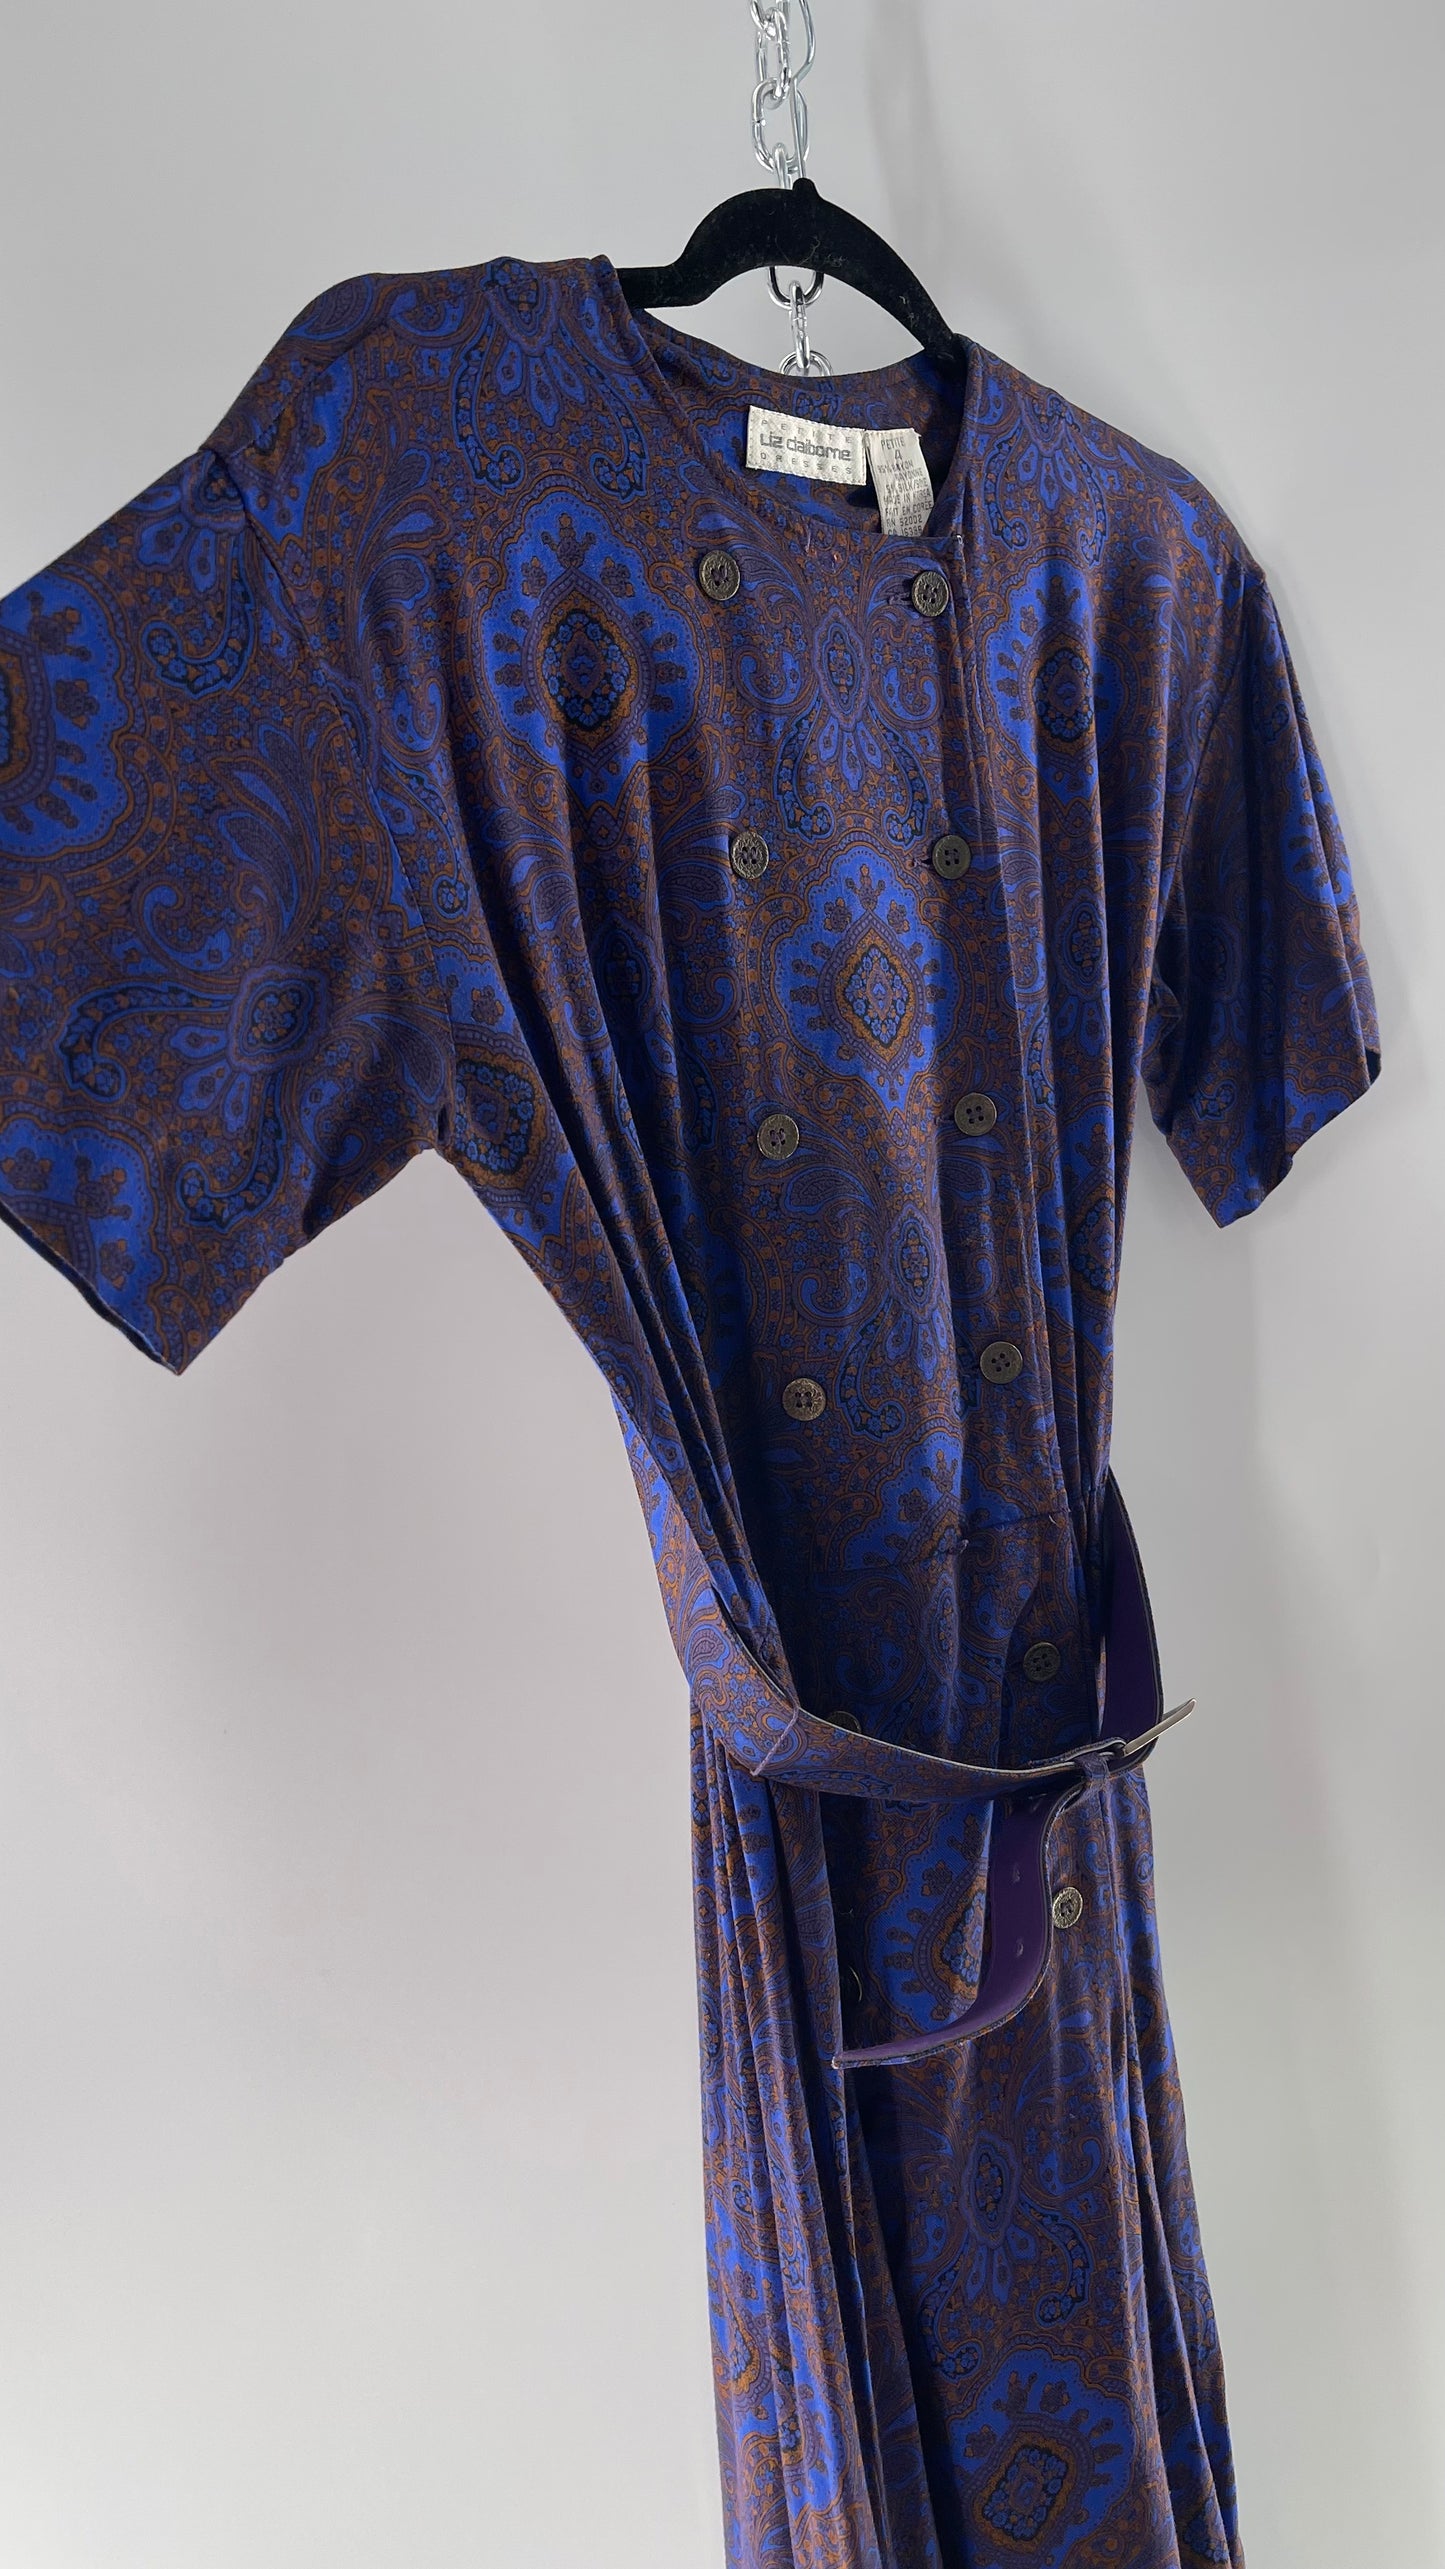 Vintage Liz Claiborne Cobalt Blue and Mustard Paisley Patterned 60s Style Dress(4)